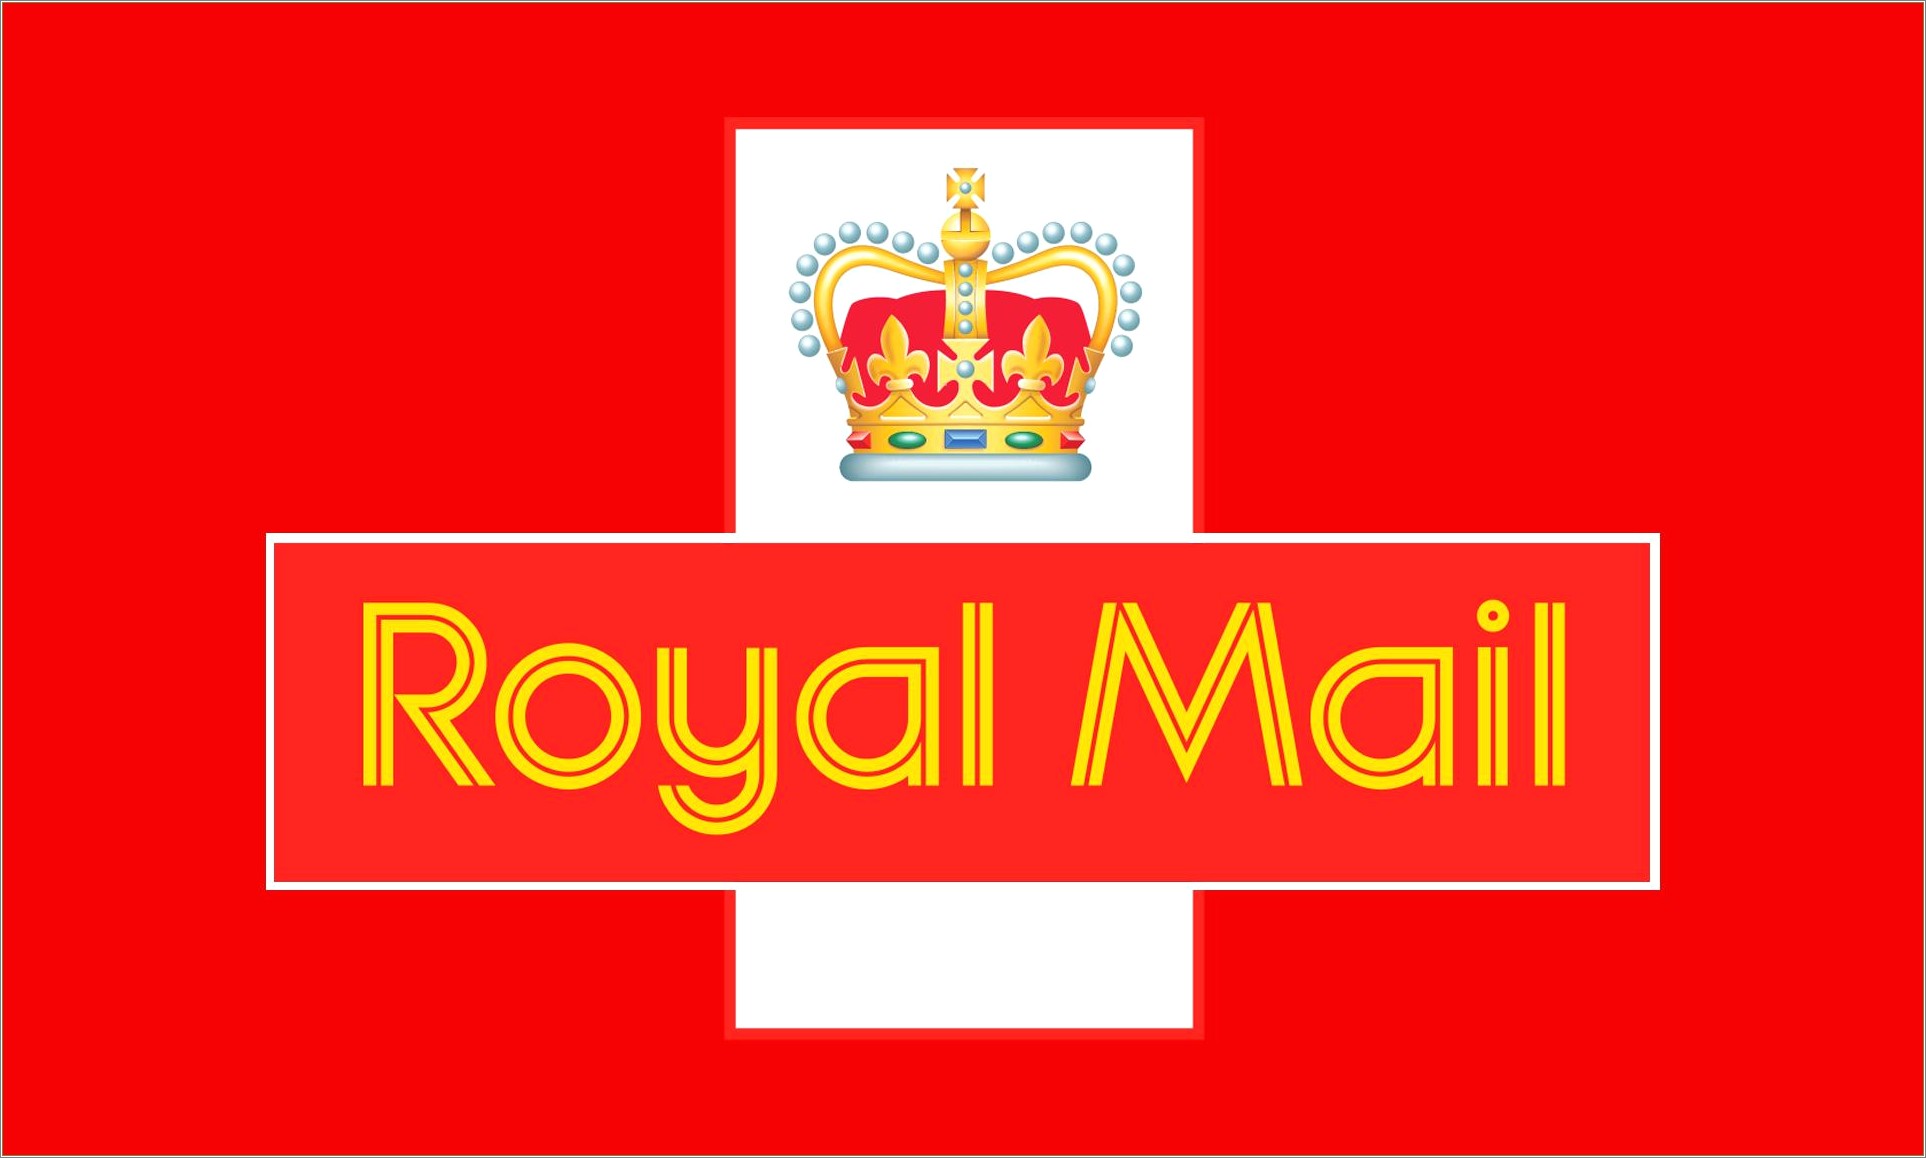 Royal Mail Wedding Post Box Sign Template Free